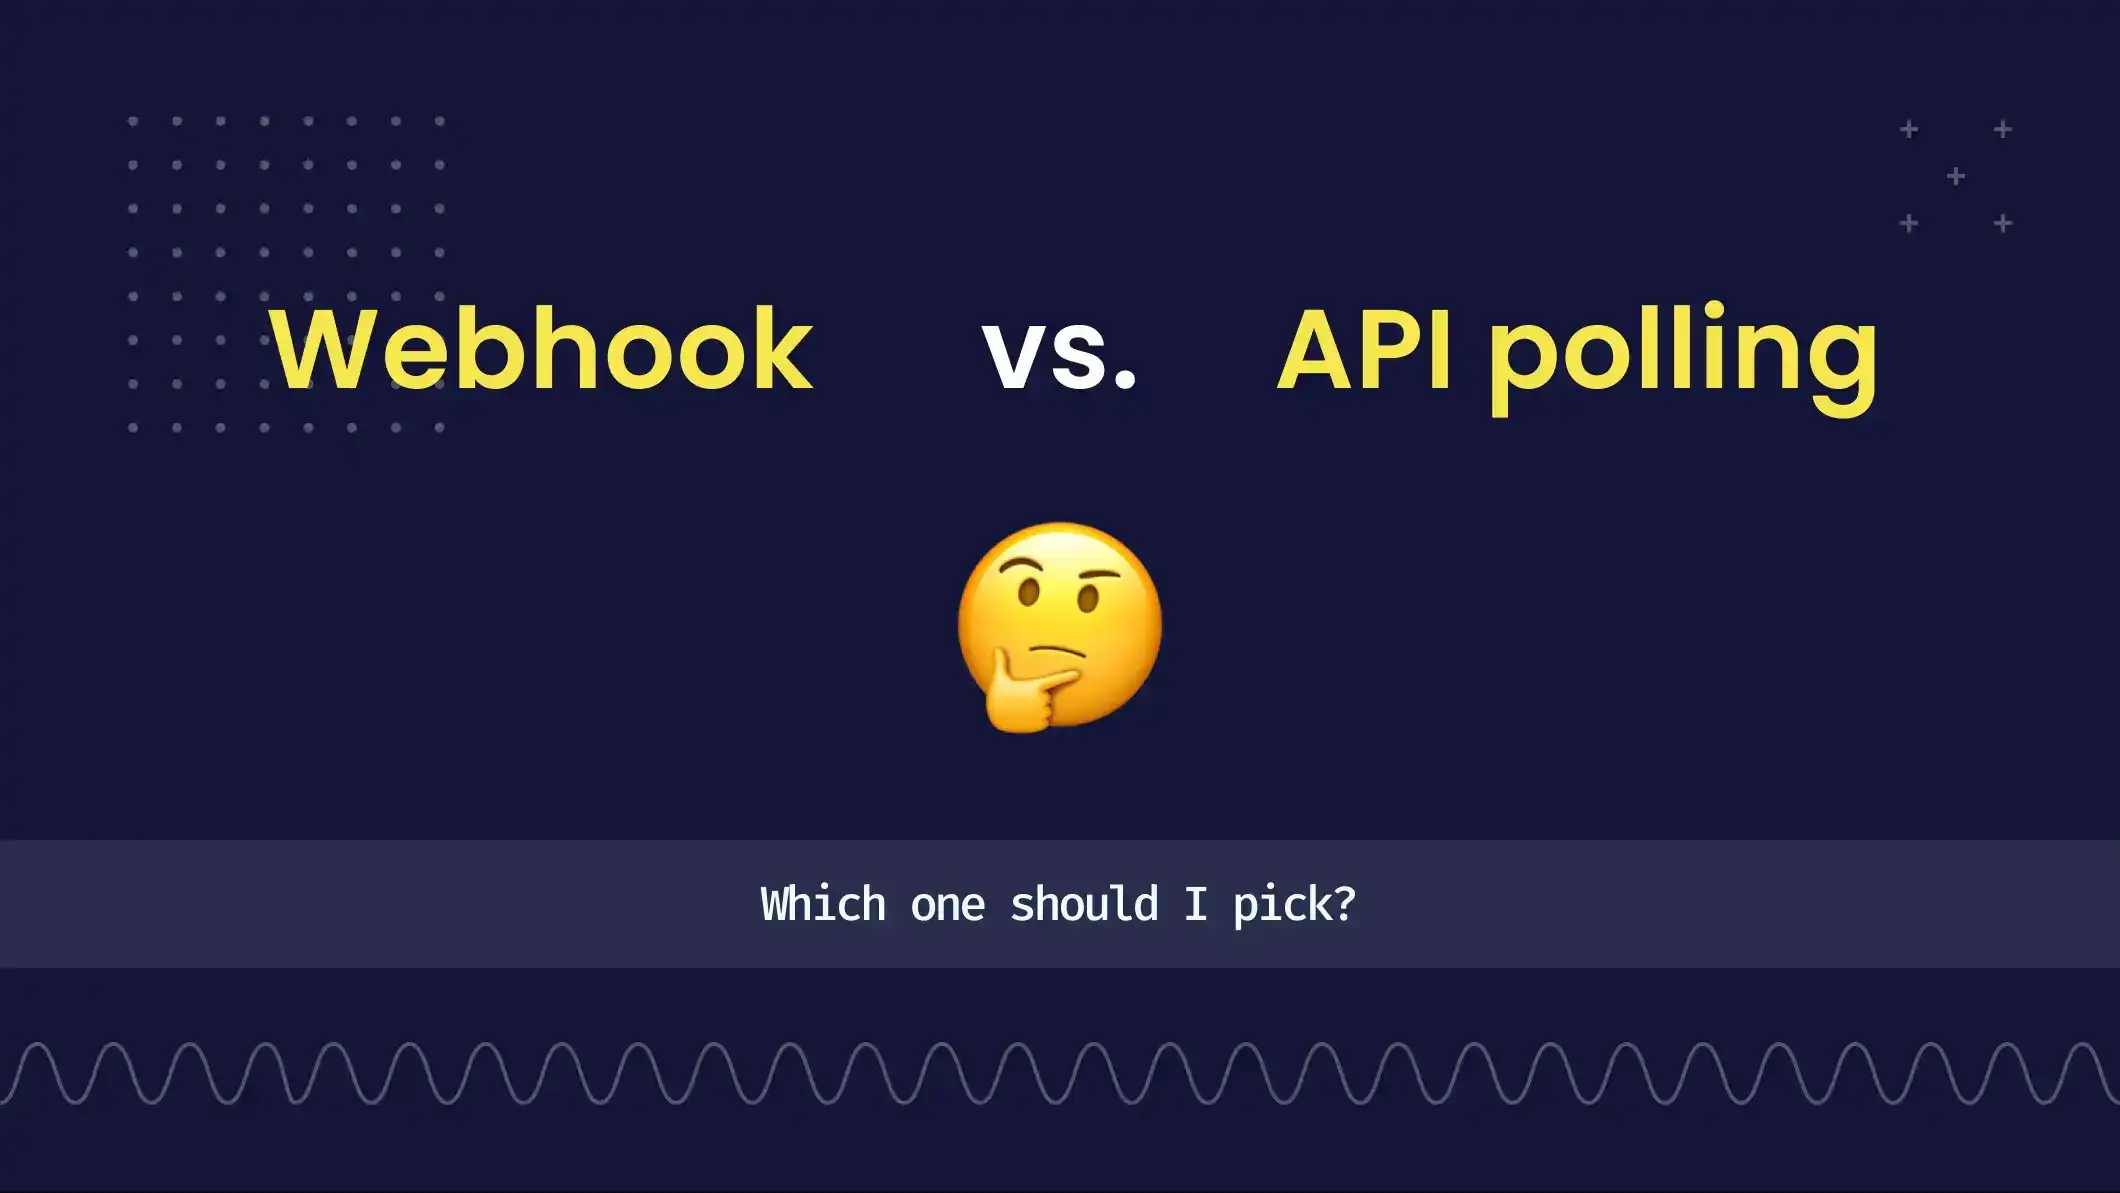 Webhooks vs. polling